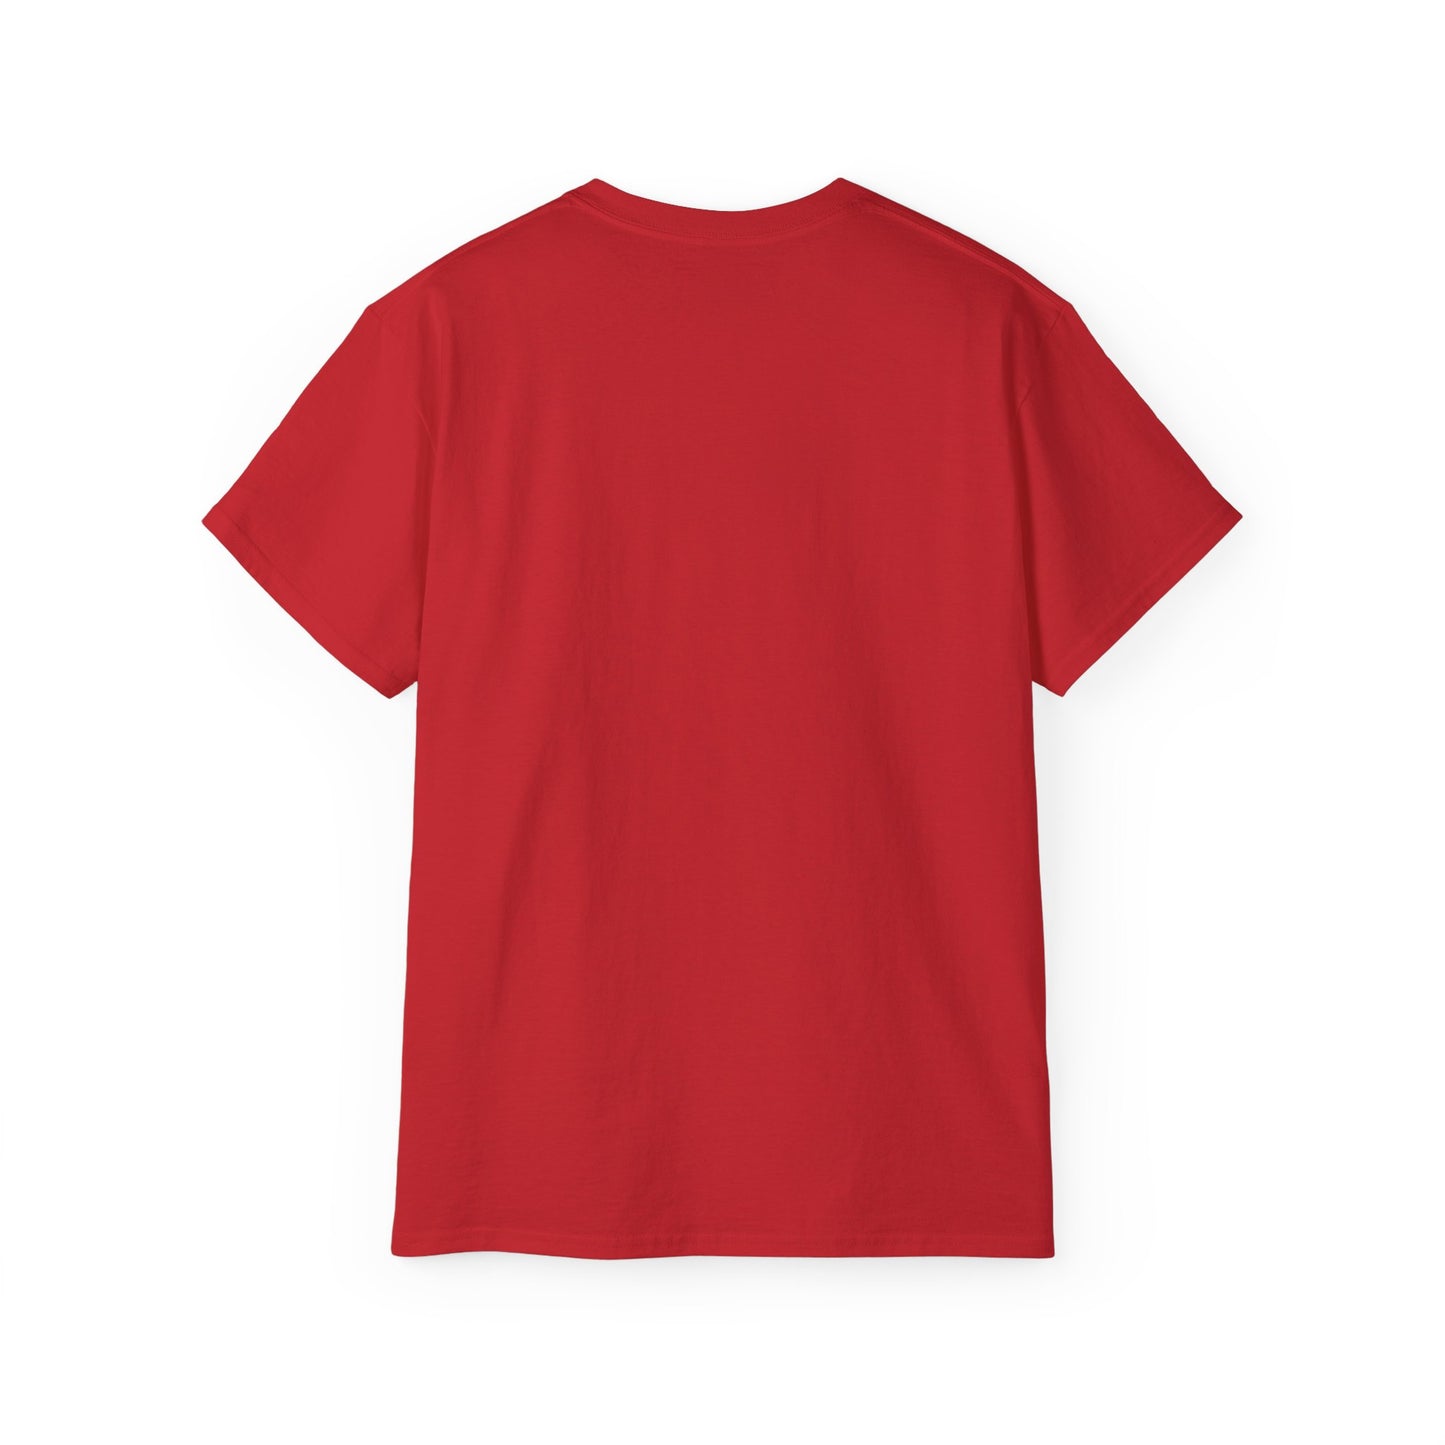 Unisex Ultra Cotton design (Hardcore) T-shirt